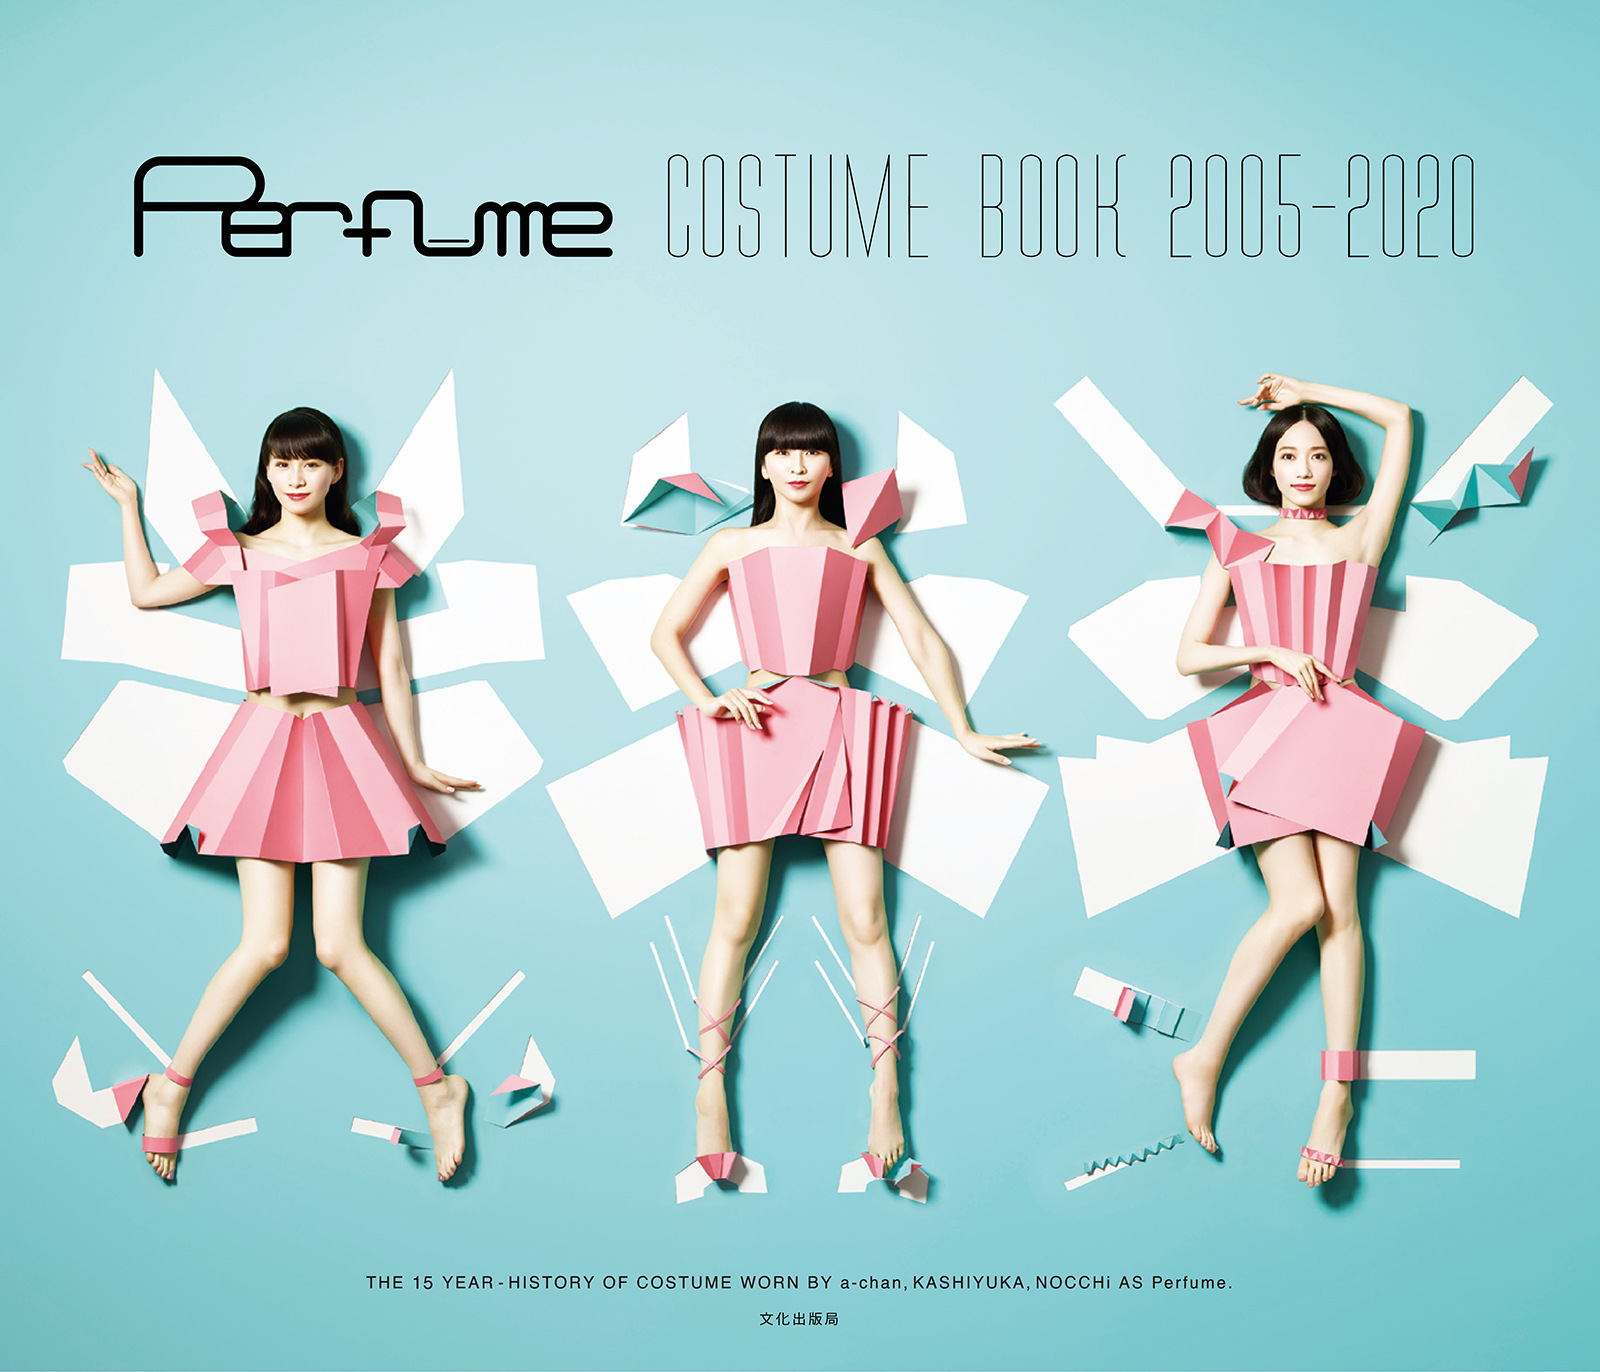 Perfume COSTUME BOOK 2005-2020の商品画像